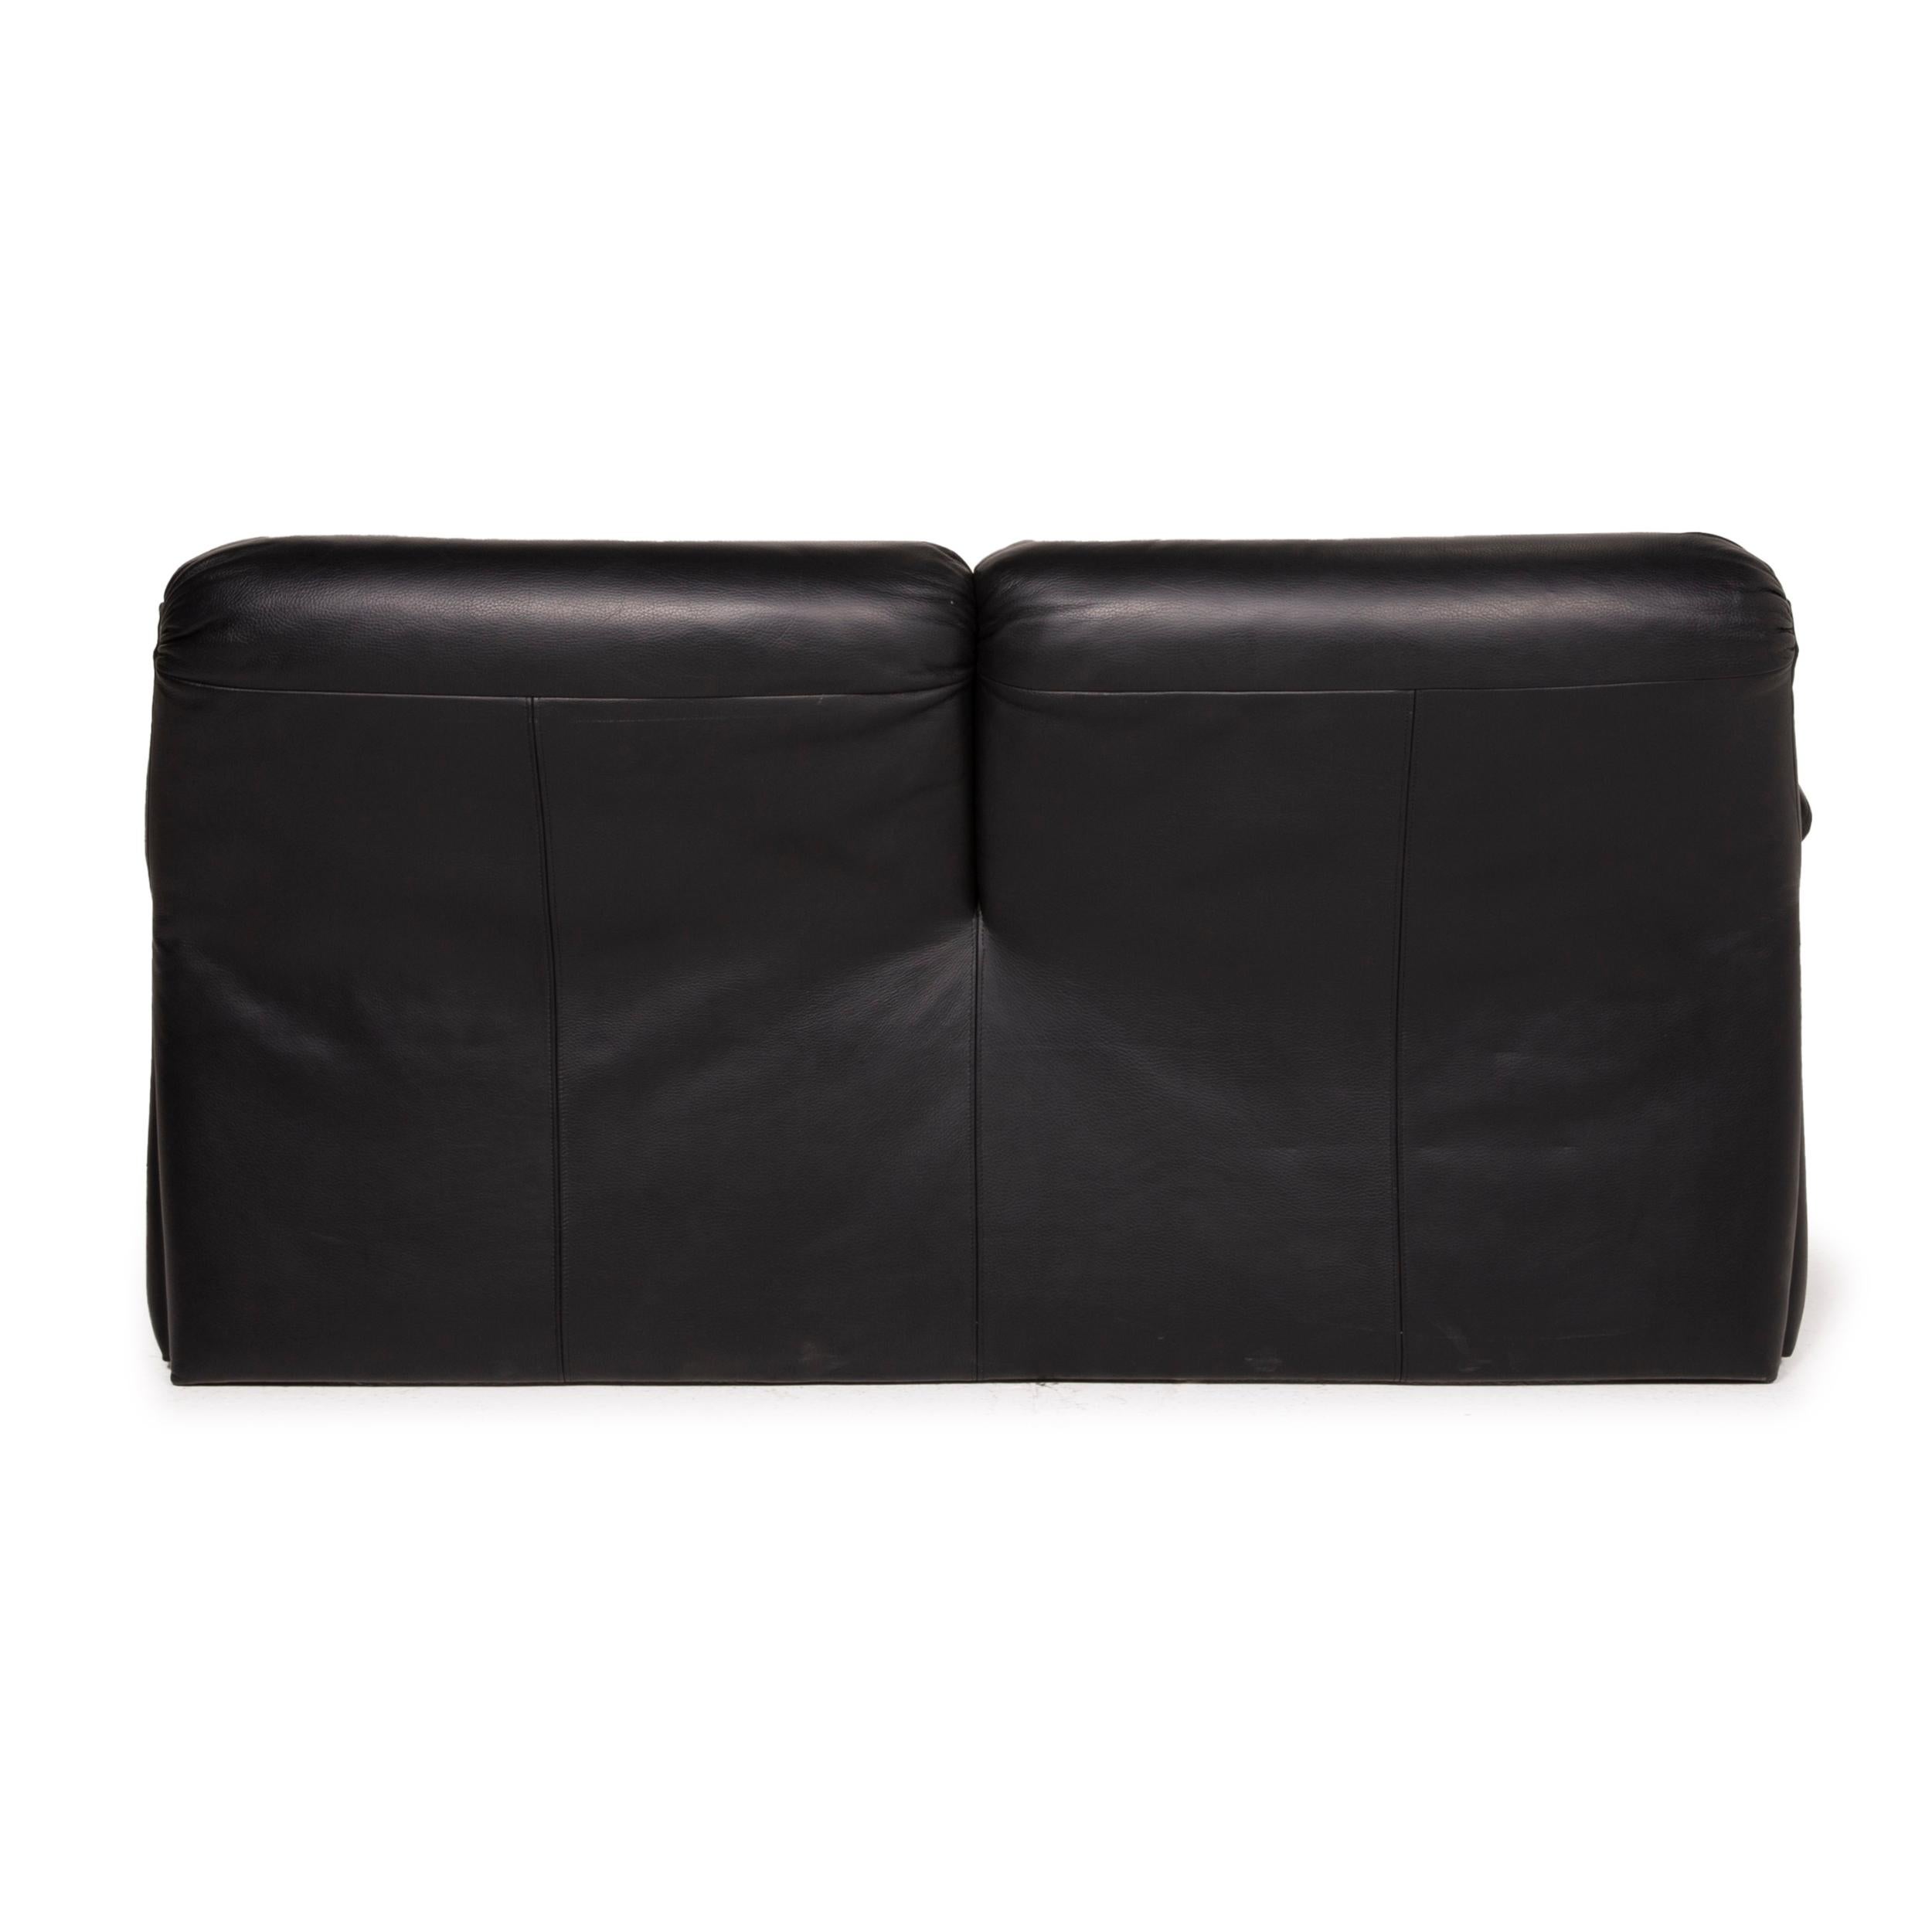 De Sede Hans Kaufeld Leather Sofa Black Two-Seater Function 4